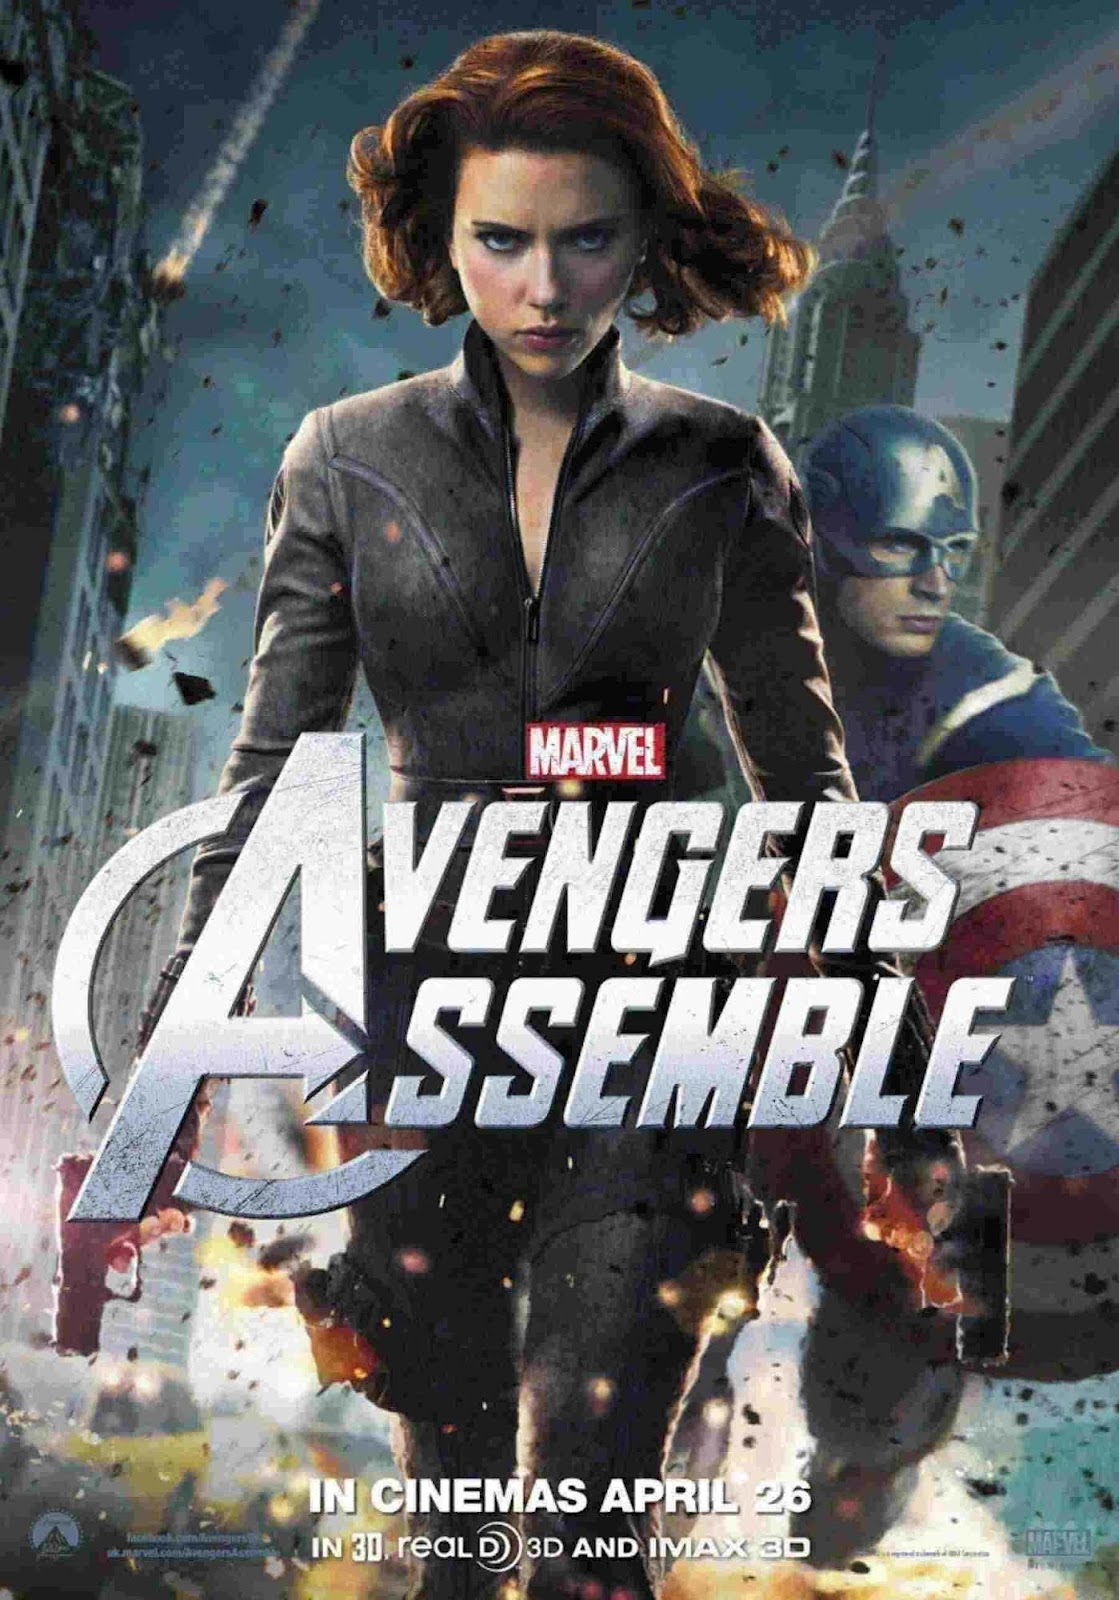 Avengers Assemble. UK Cinemas April 27th 2012. Latest 1119 x 1600